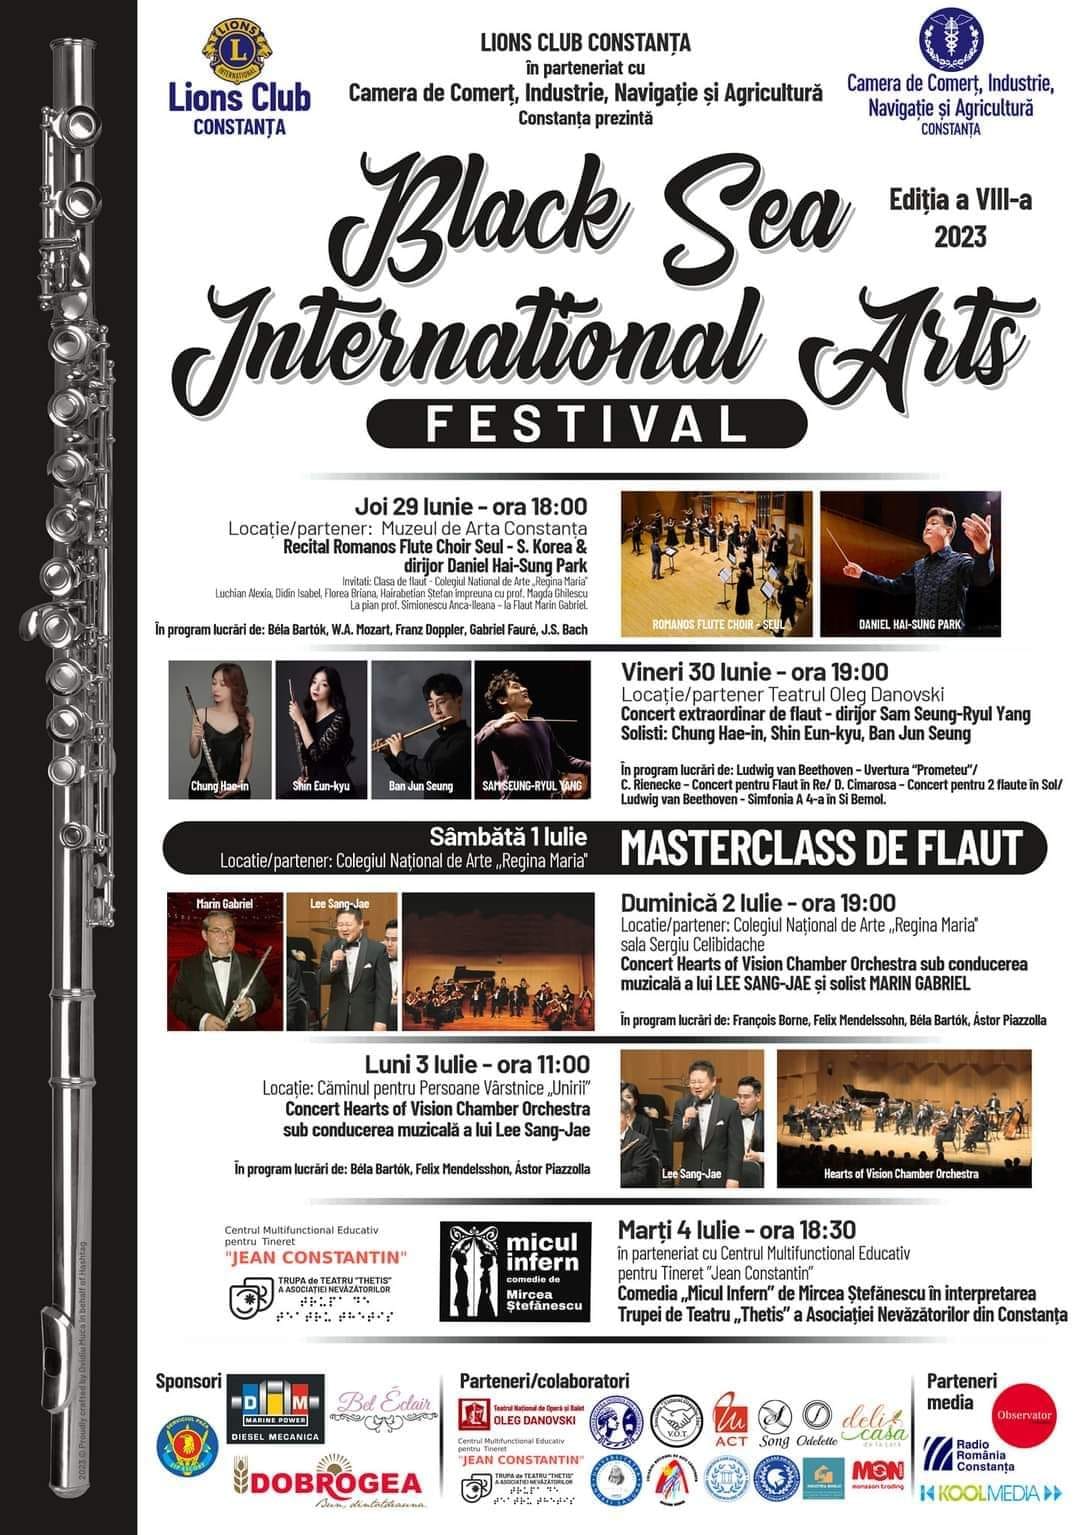 Recital Romanos Flute Choir Seul – S. Korea & dirijor Daniel Hai-Sung Park